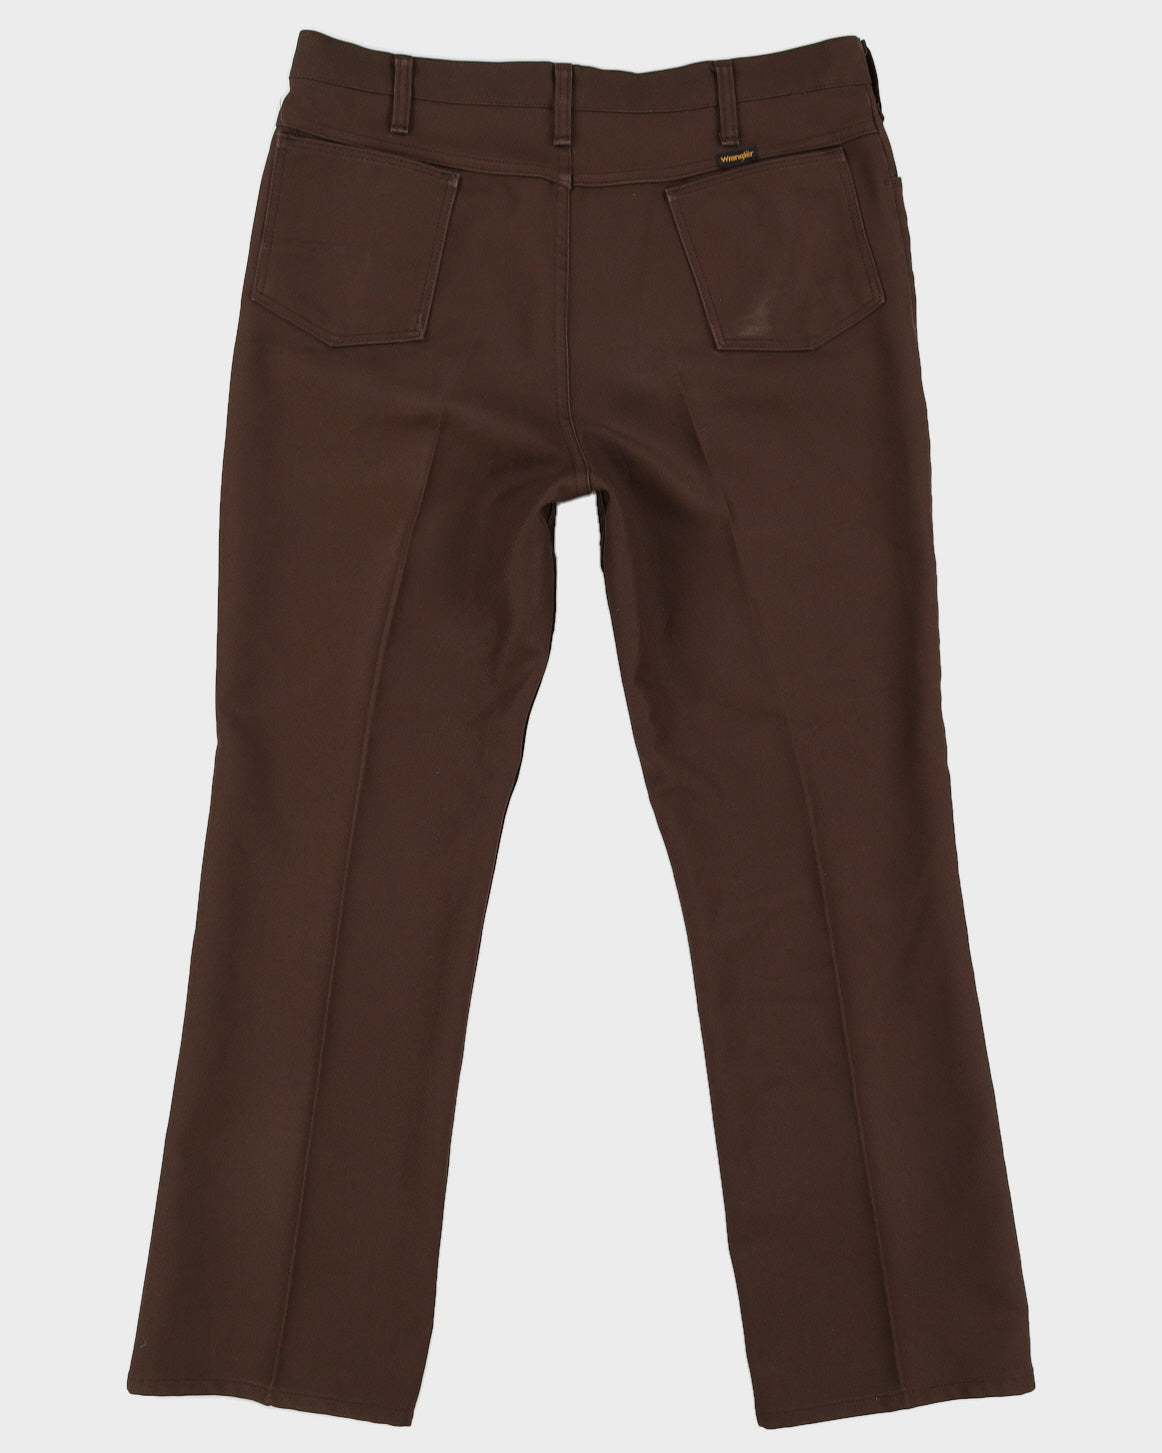 Vintage 70s Brown Wrangler Trousers - W38 L30